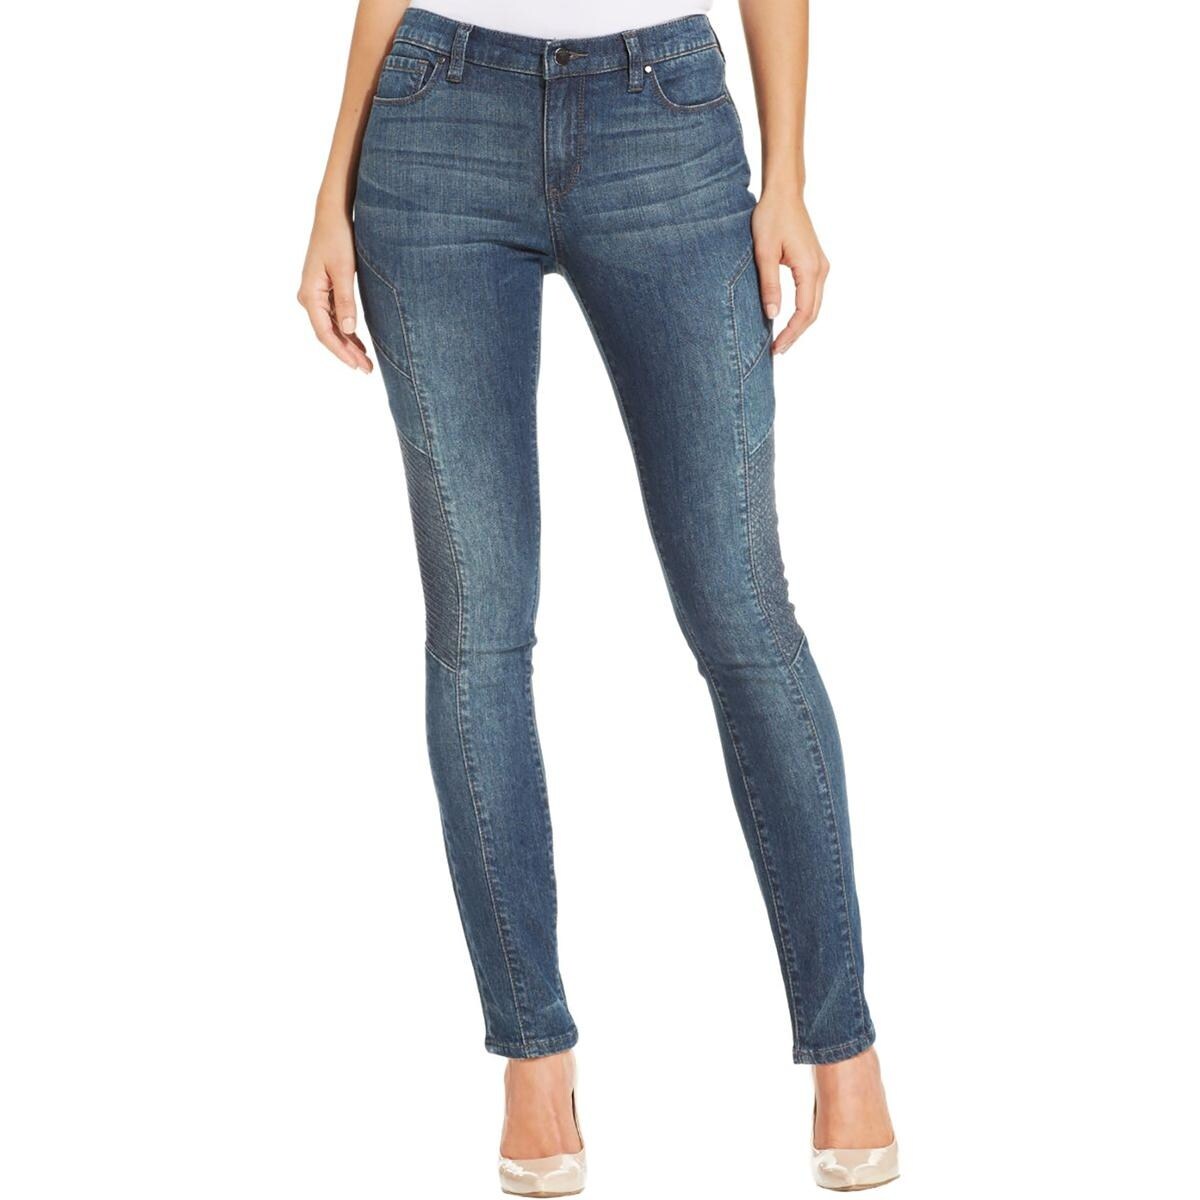 ladies low rise skinny jeans